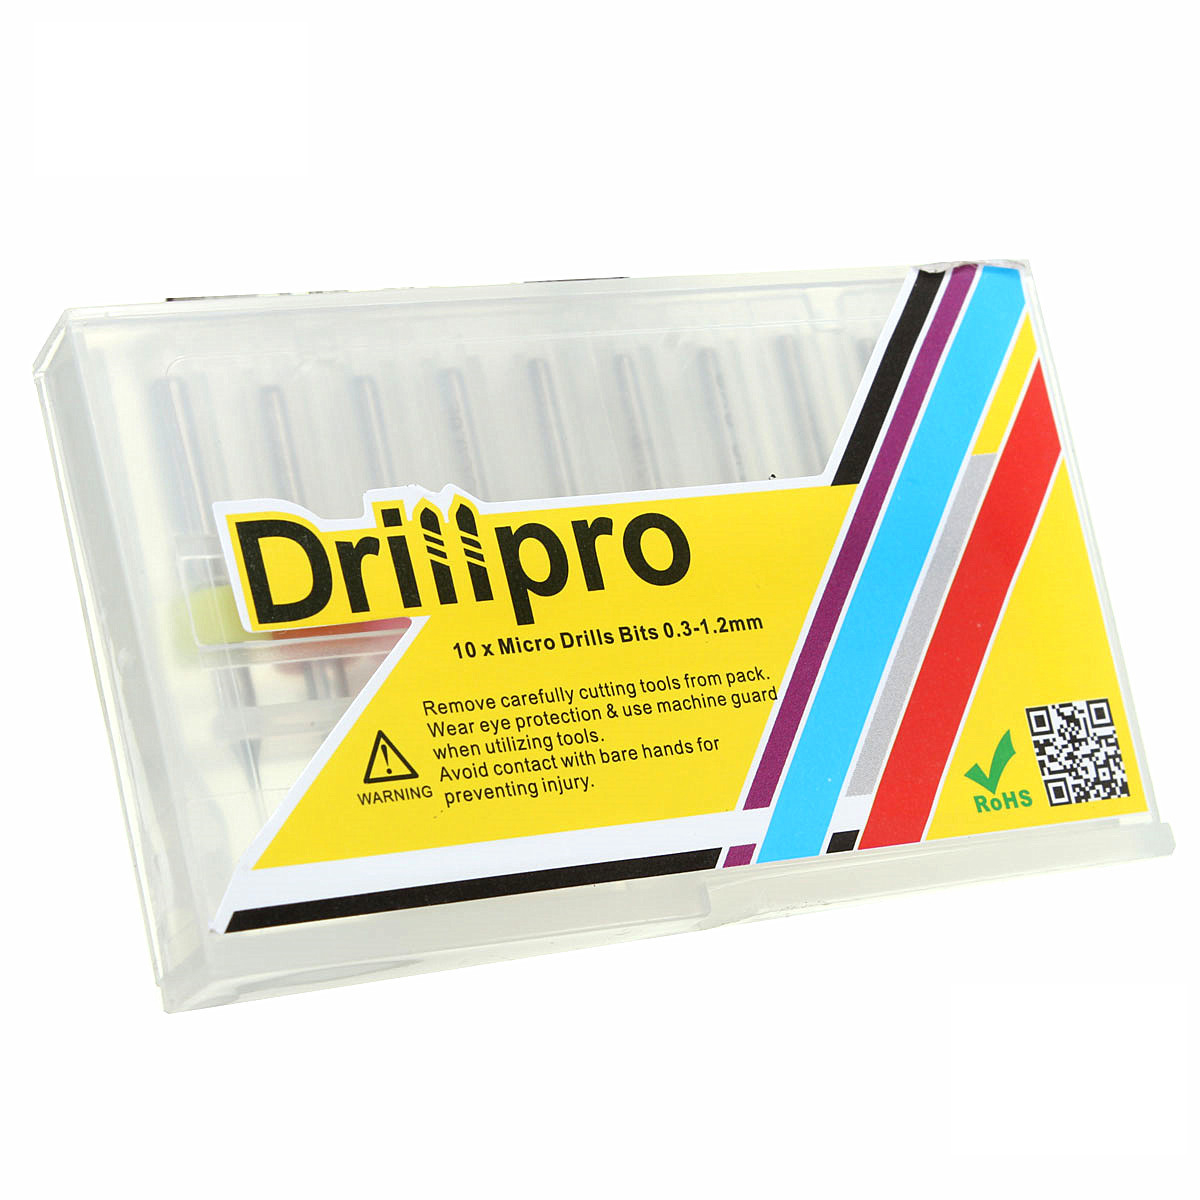 Drillpro 10x Carbide 0.3-1.2mm Micro Drills Bits Set PCB CNC Jewelry Rotary Milling Tool